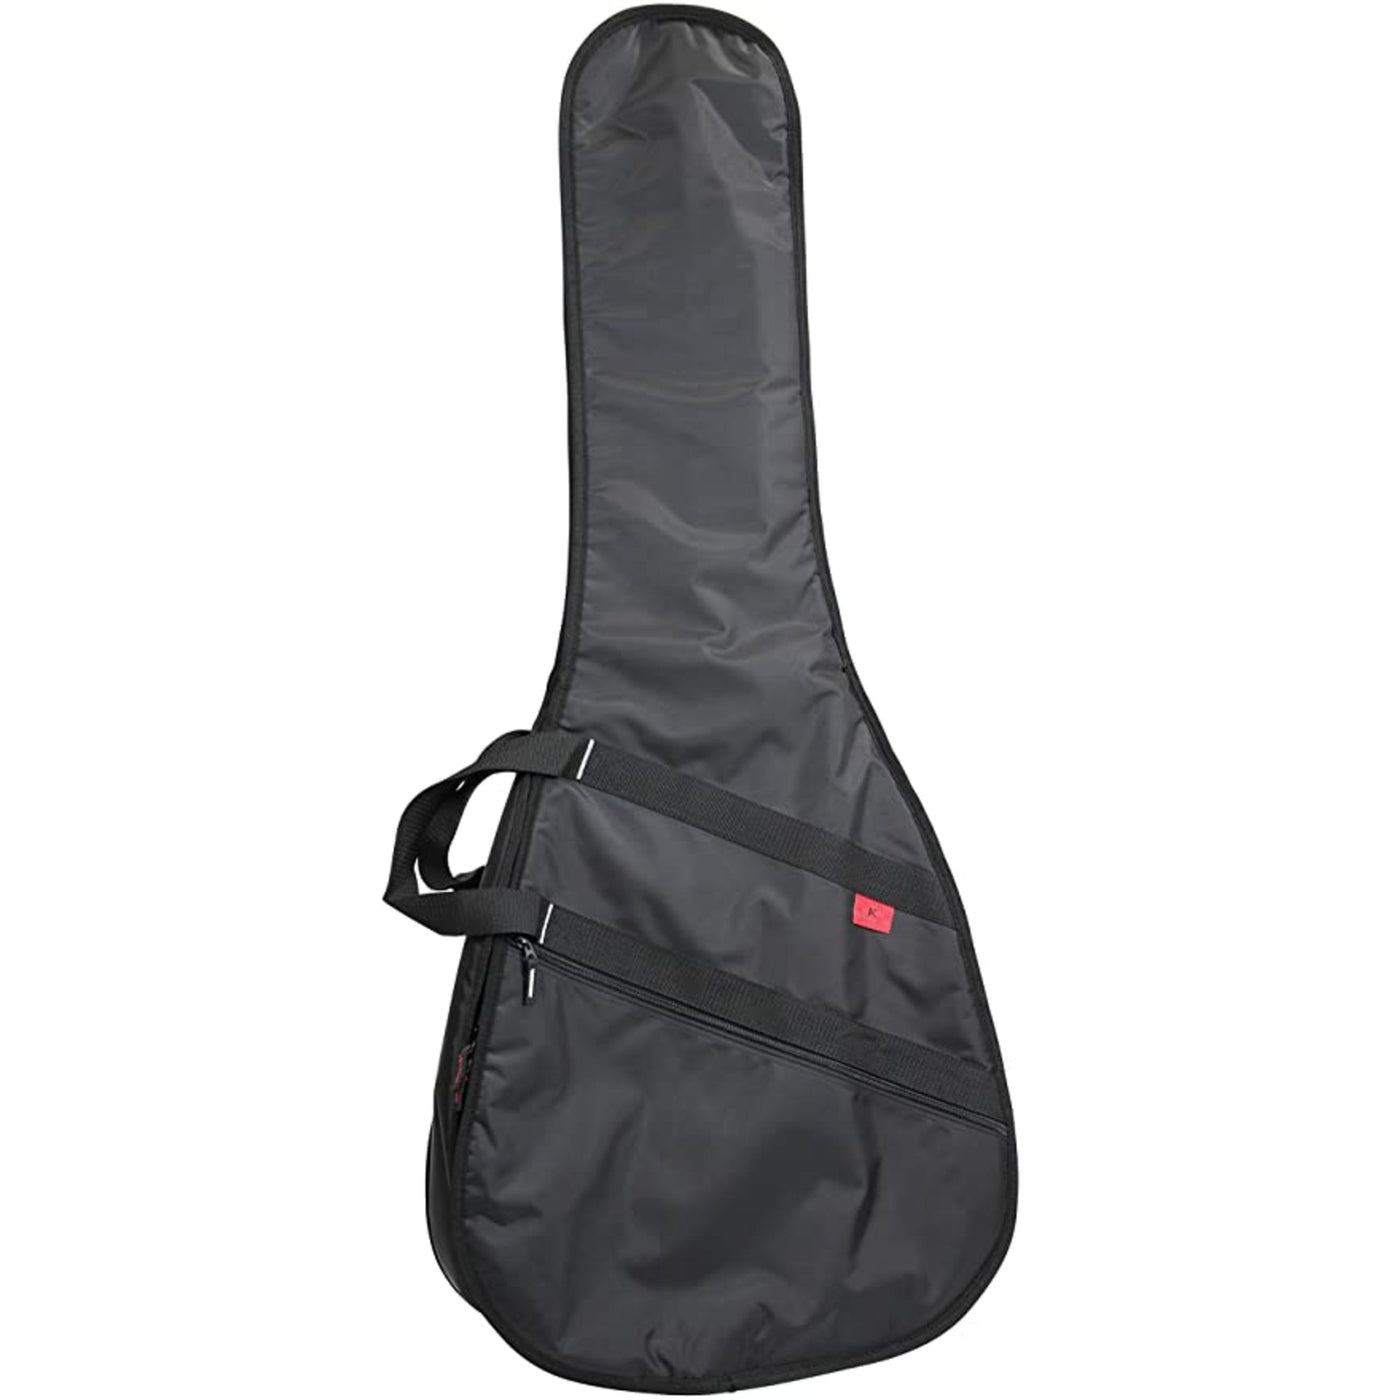 Kaces RAZOR Xpress 3/4 or 1/2 Size Acoustic Guitar Bag